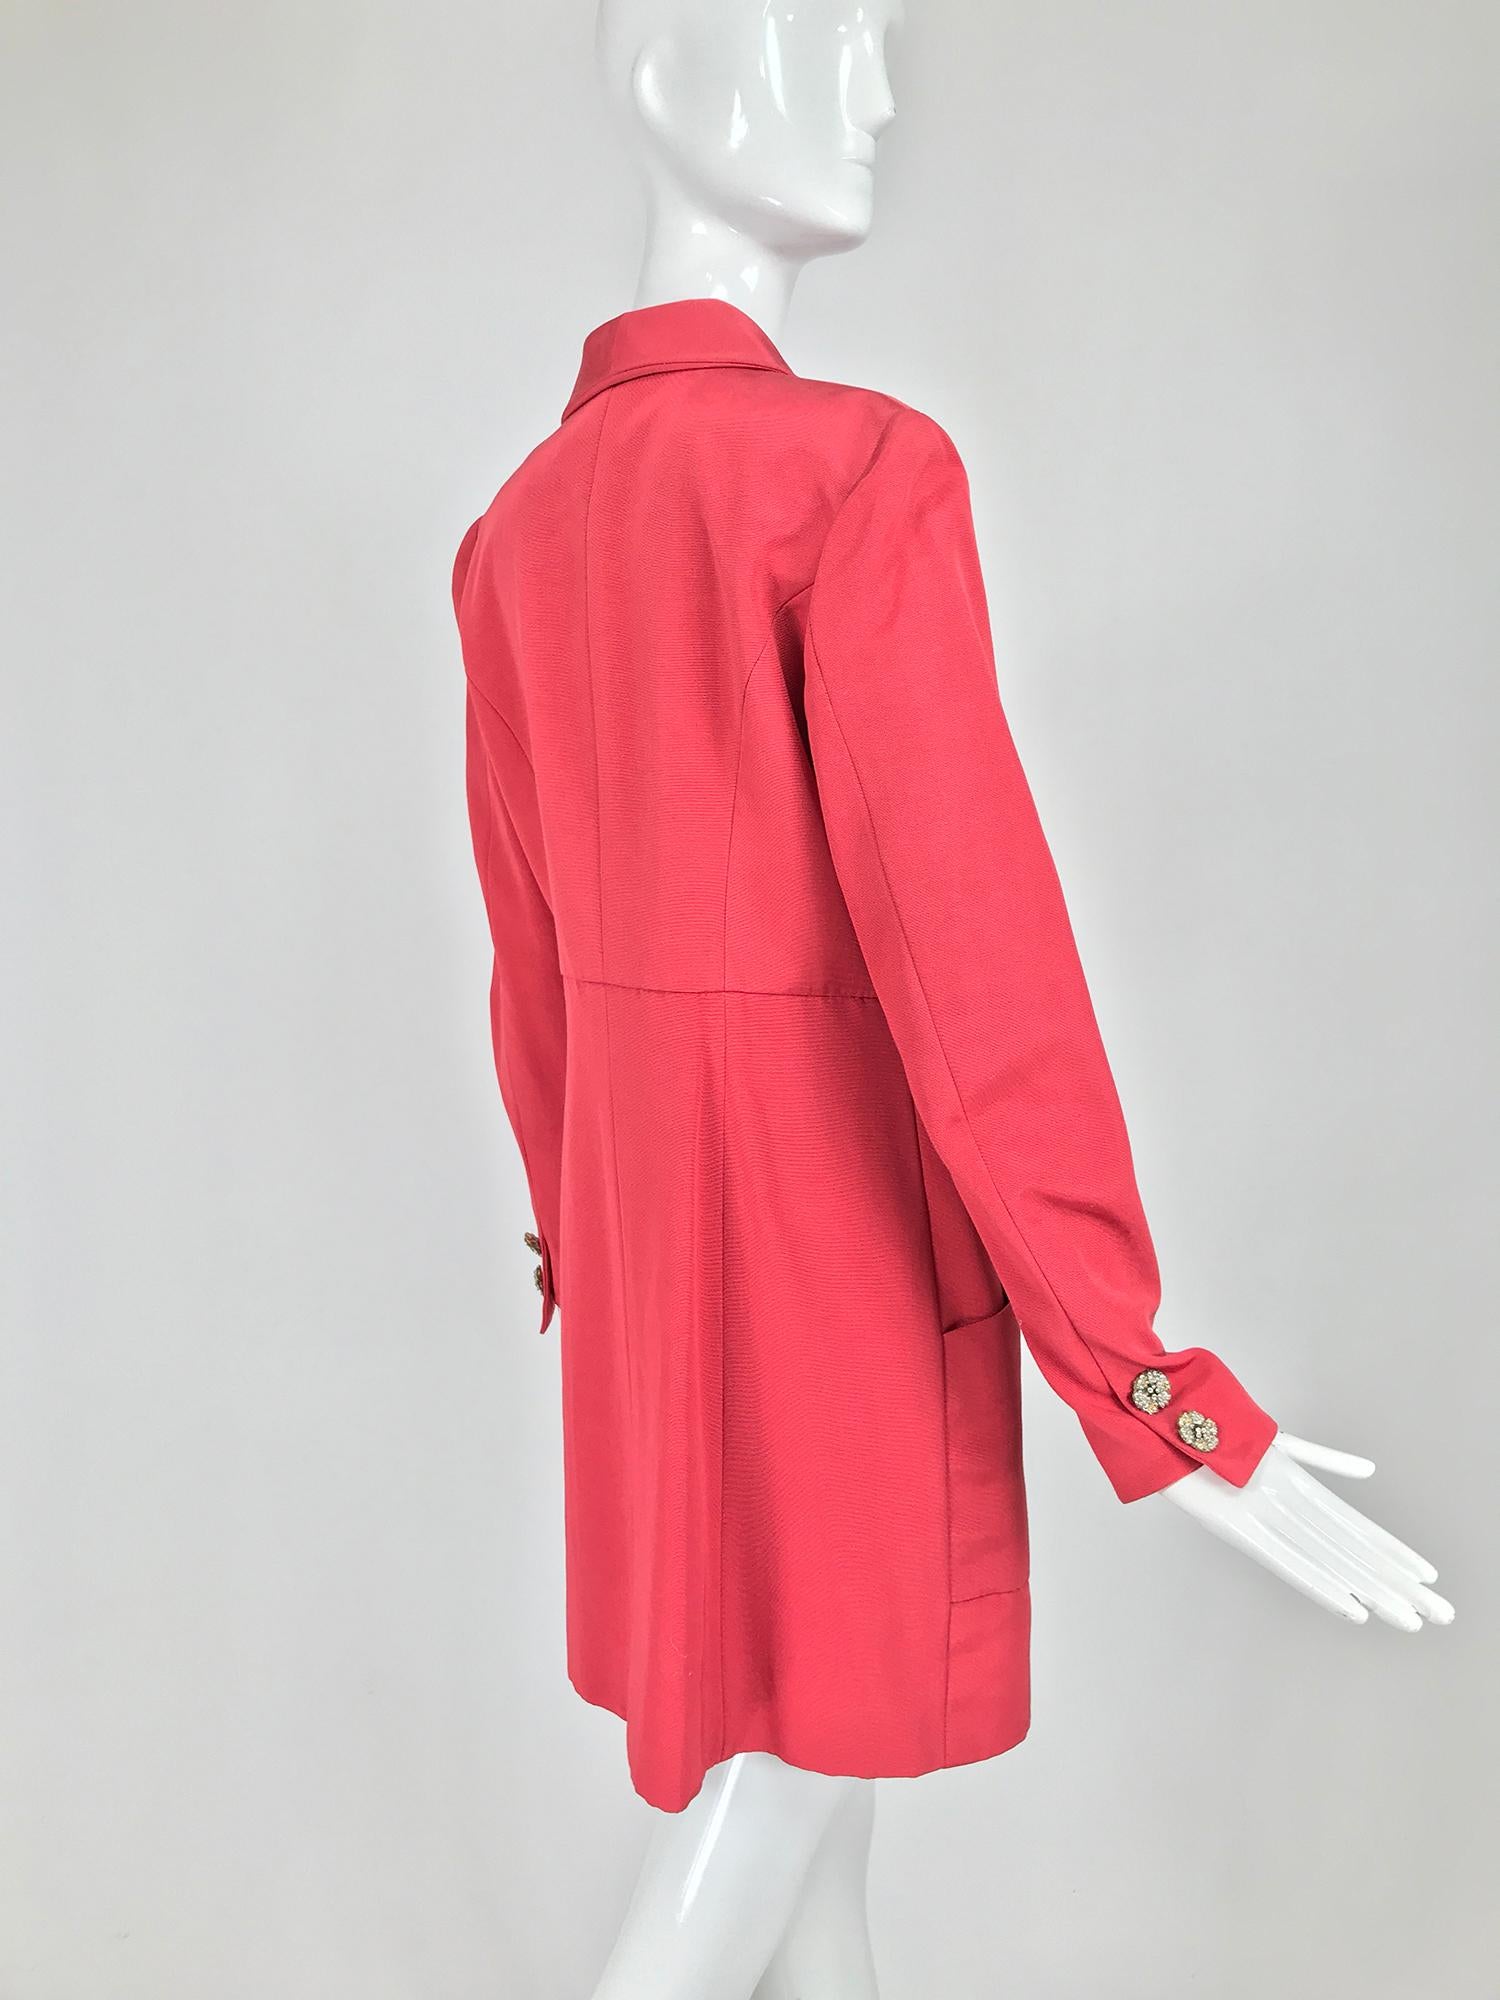 Women's Karl Lagerfeld Coral Red Silk Faille Reddingote Style Coat 1990s